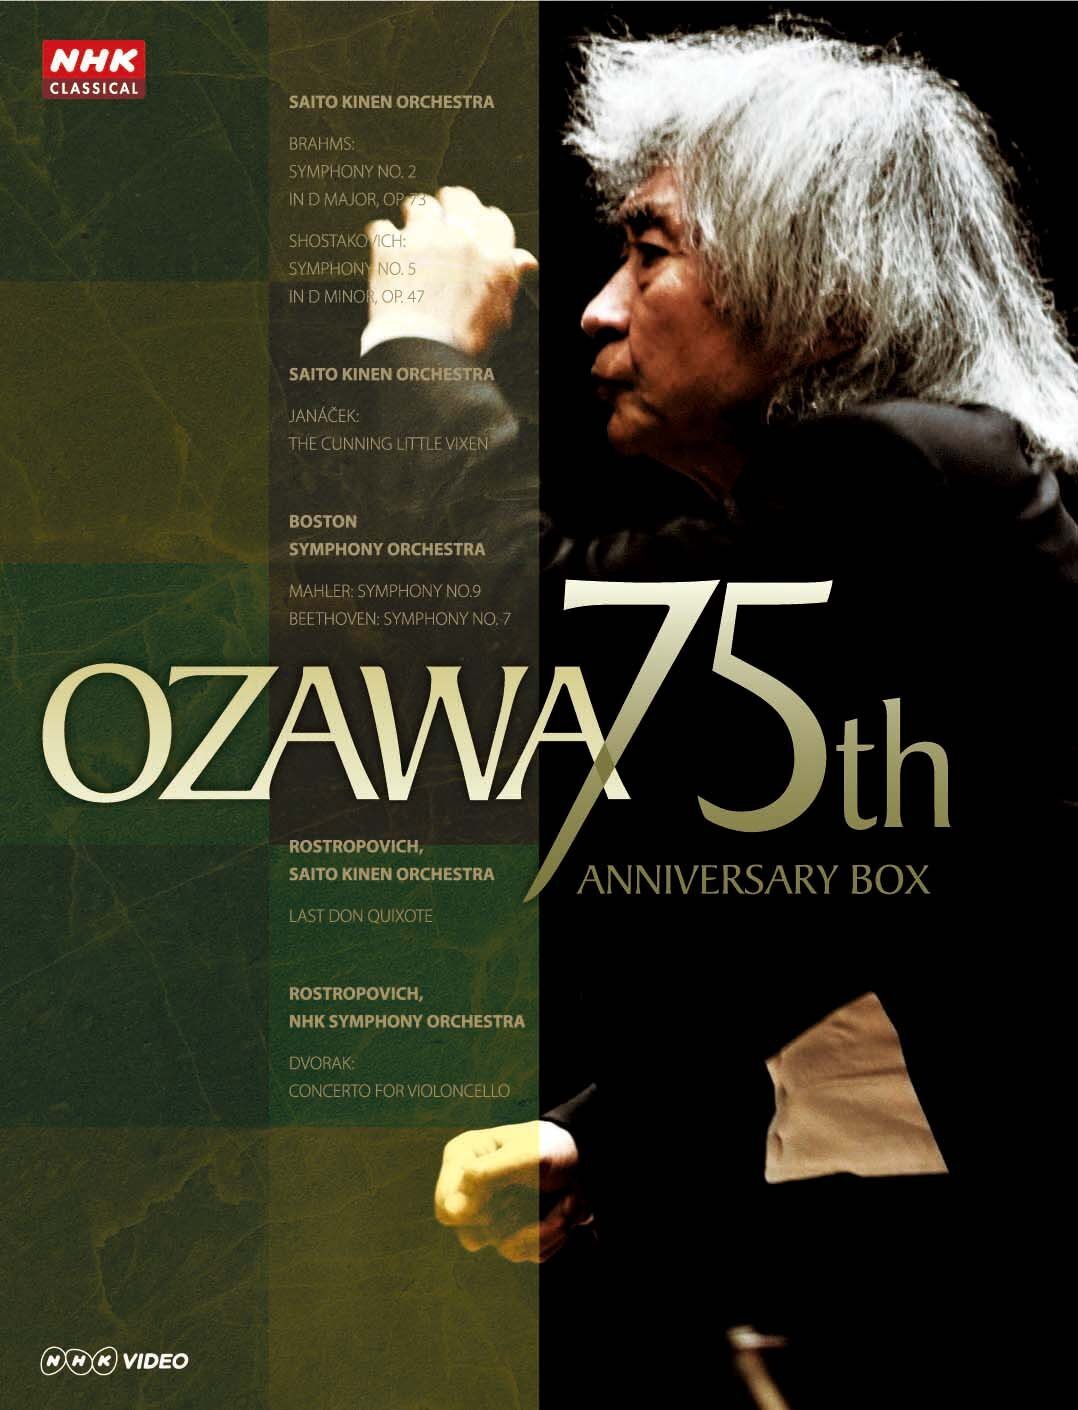 Seiji Ozawa 75th Anniversary Blu-ray Box Blu-ray (小澤征爾75th 